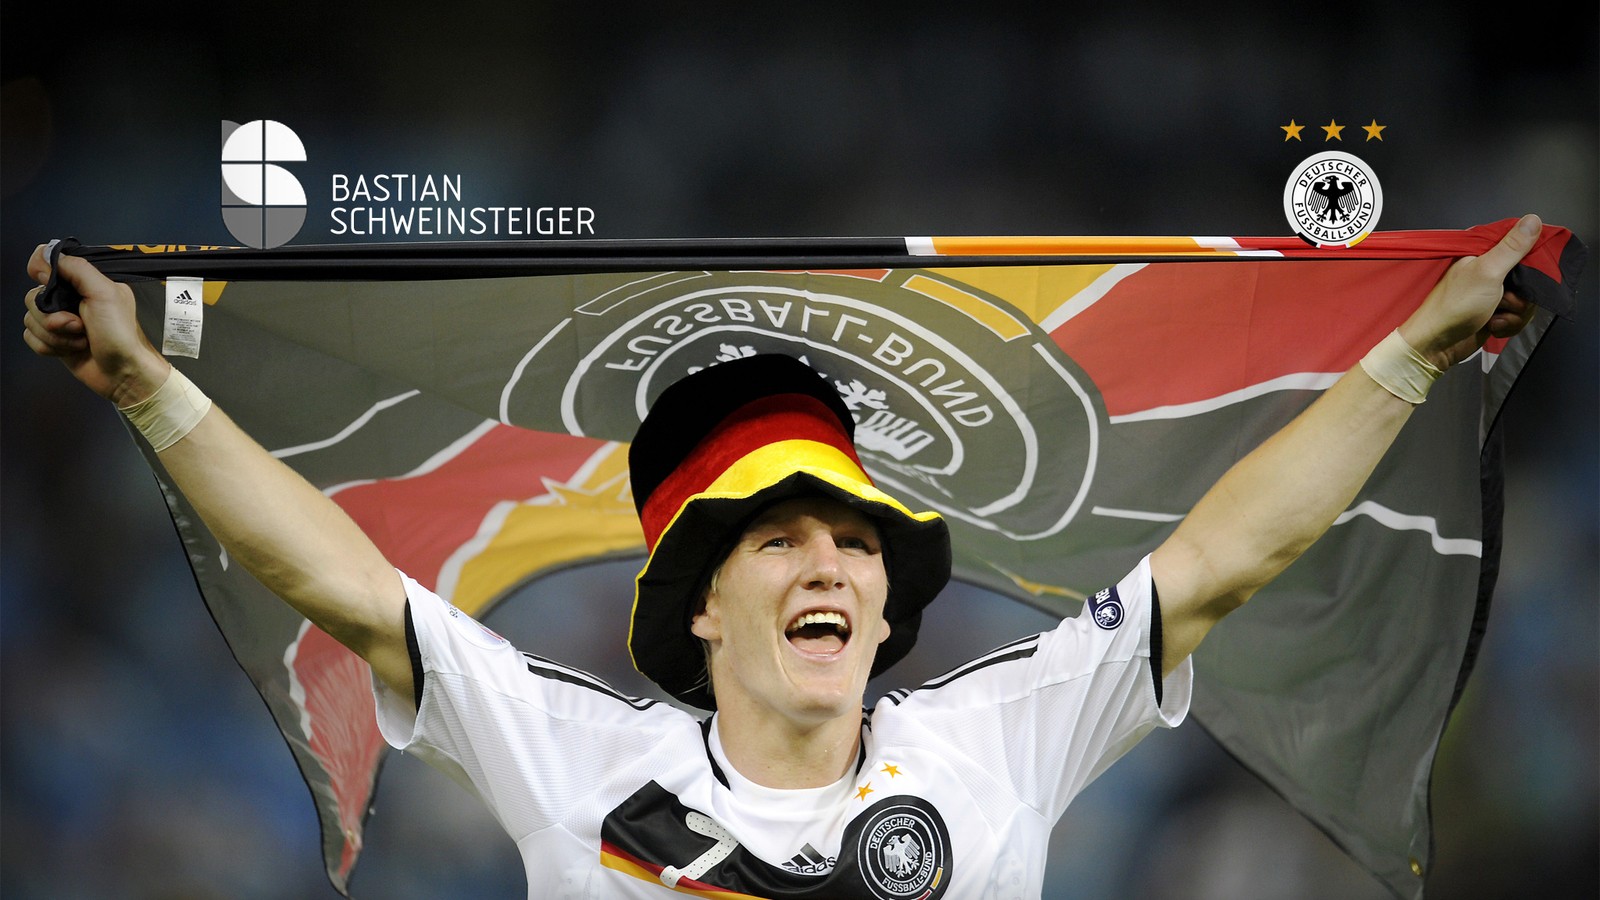 Bastian Schweinsteiger, Footballers, Germany, Soccer Wallpaper